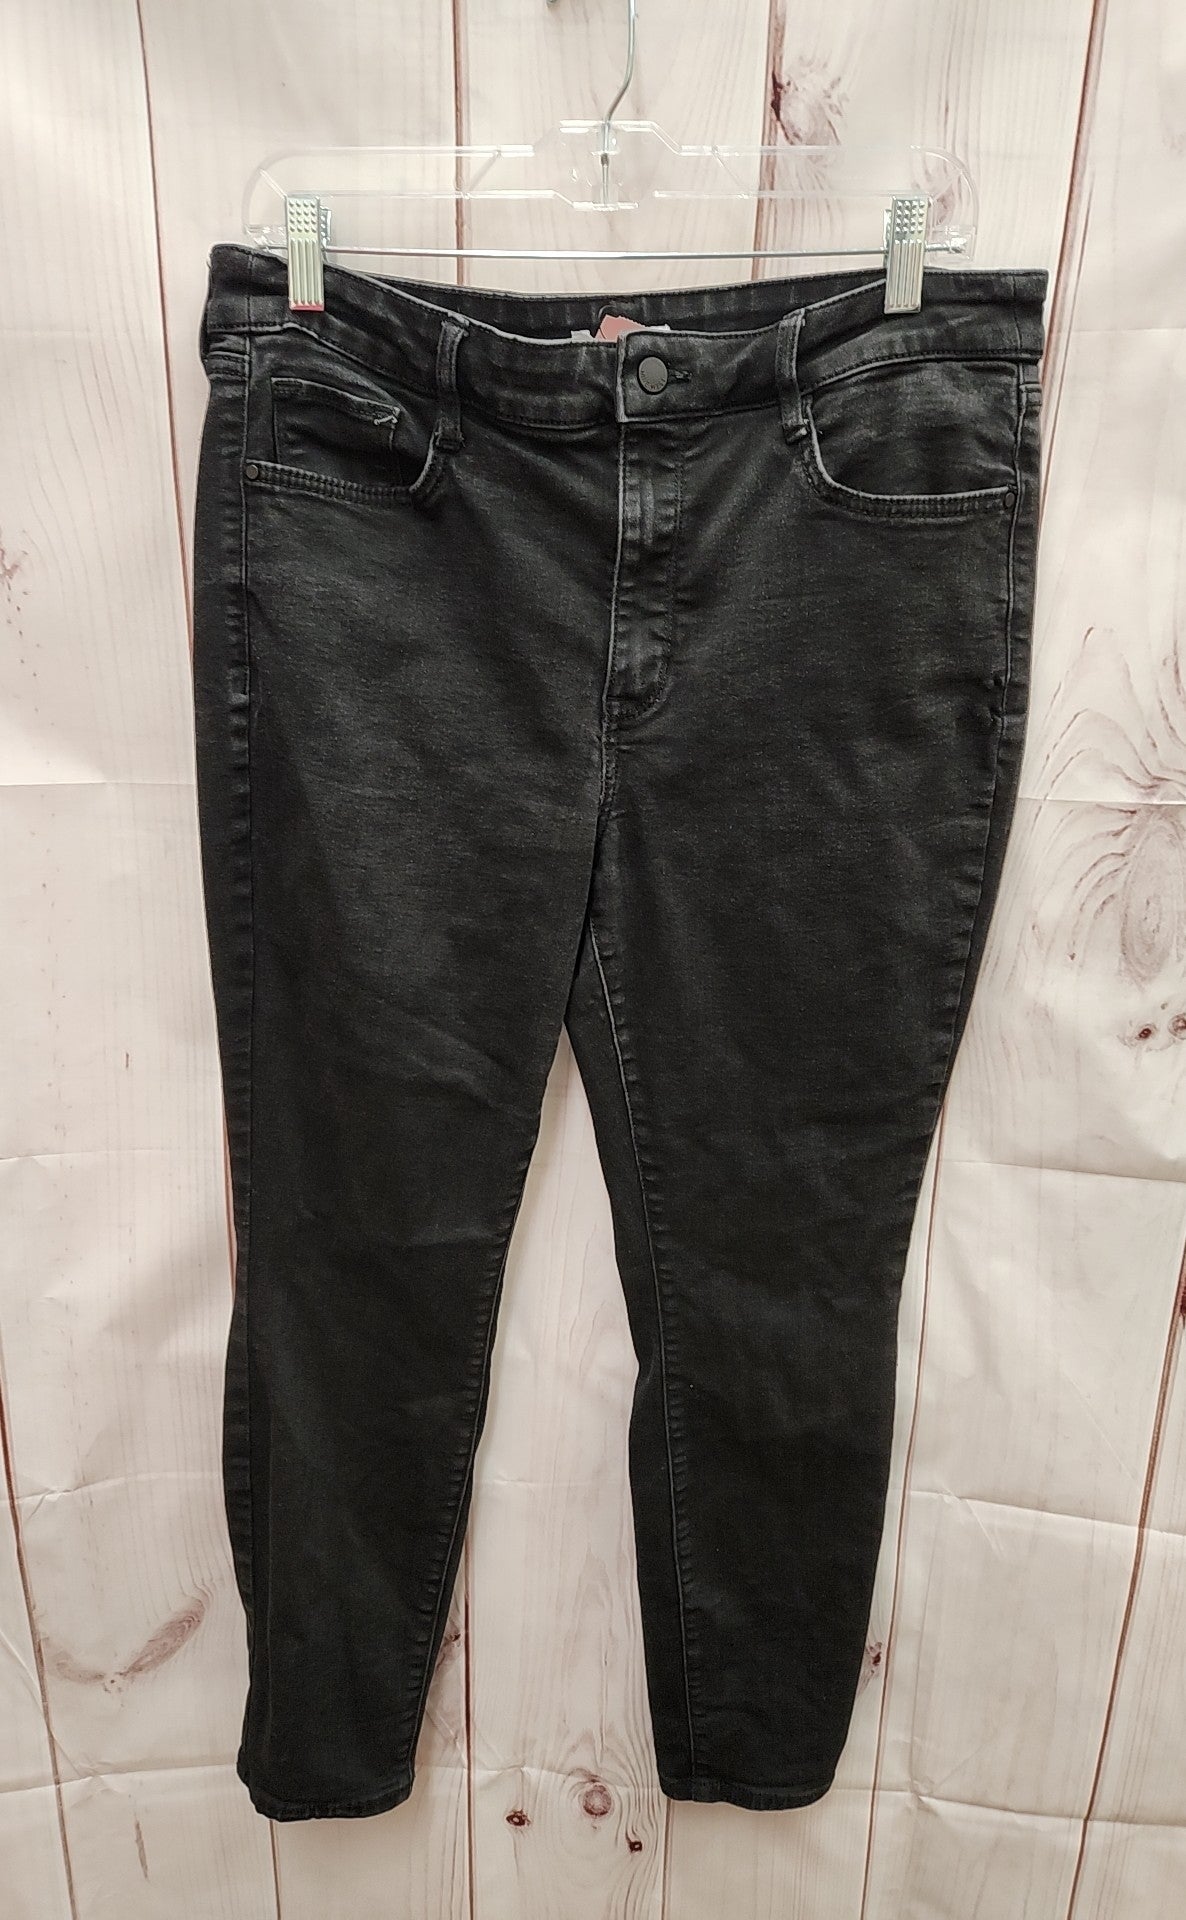 Nine West Women's Size 30 (9-10) Skinny Black Jeans